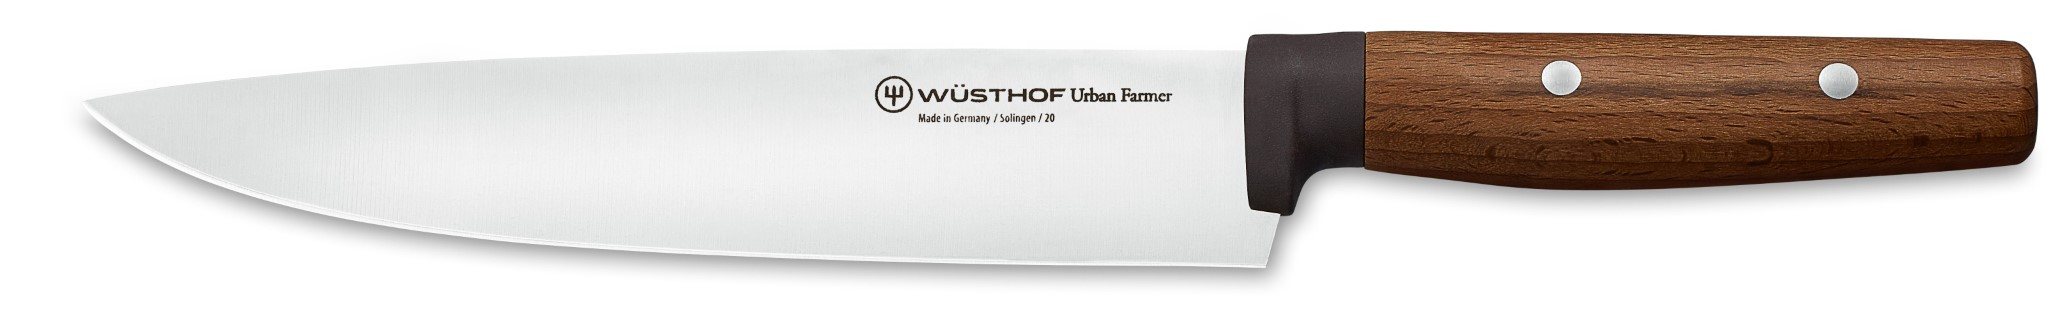 Wüsthof Urban Farmer